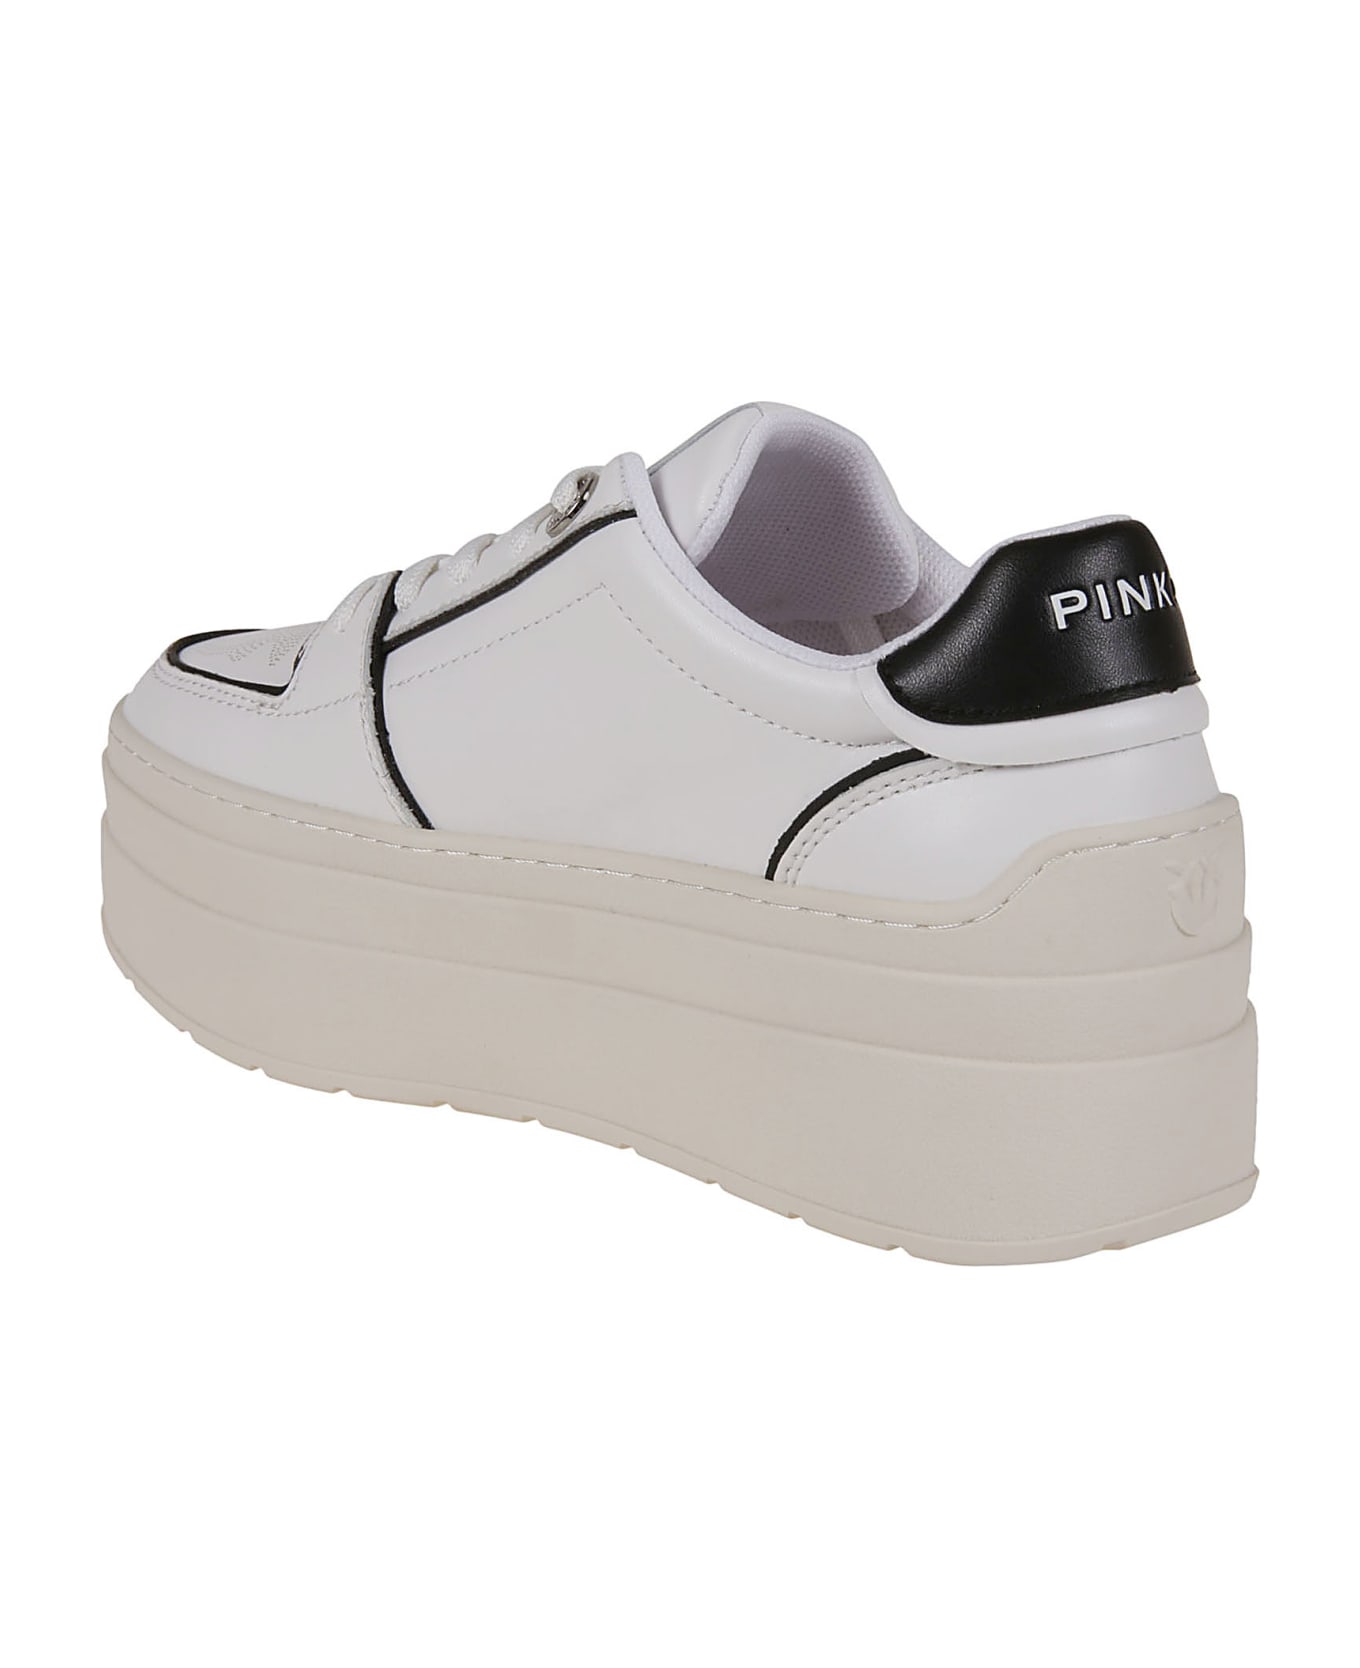 Pinko Greta 01 Calf Leather - Bianco Nero